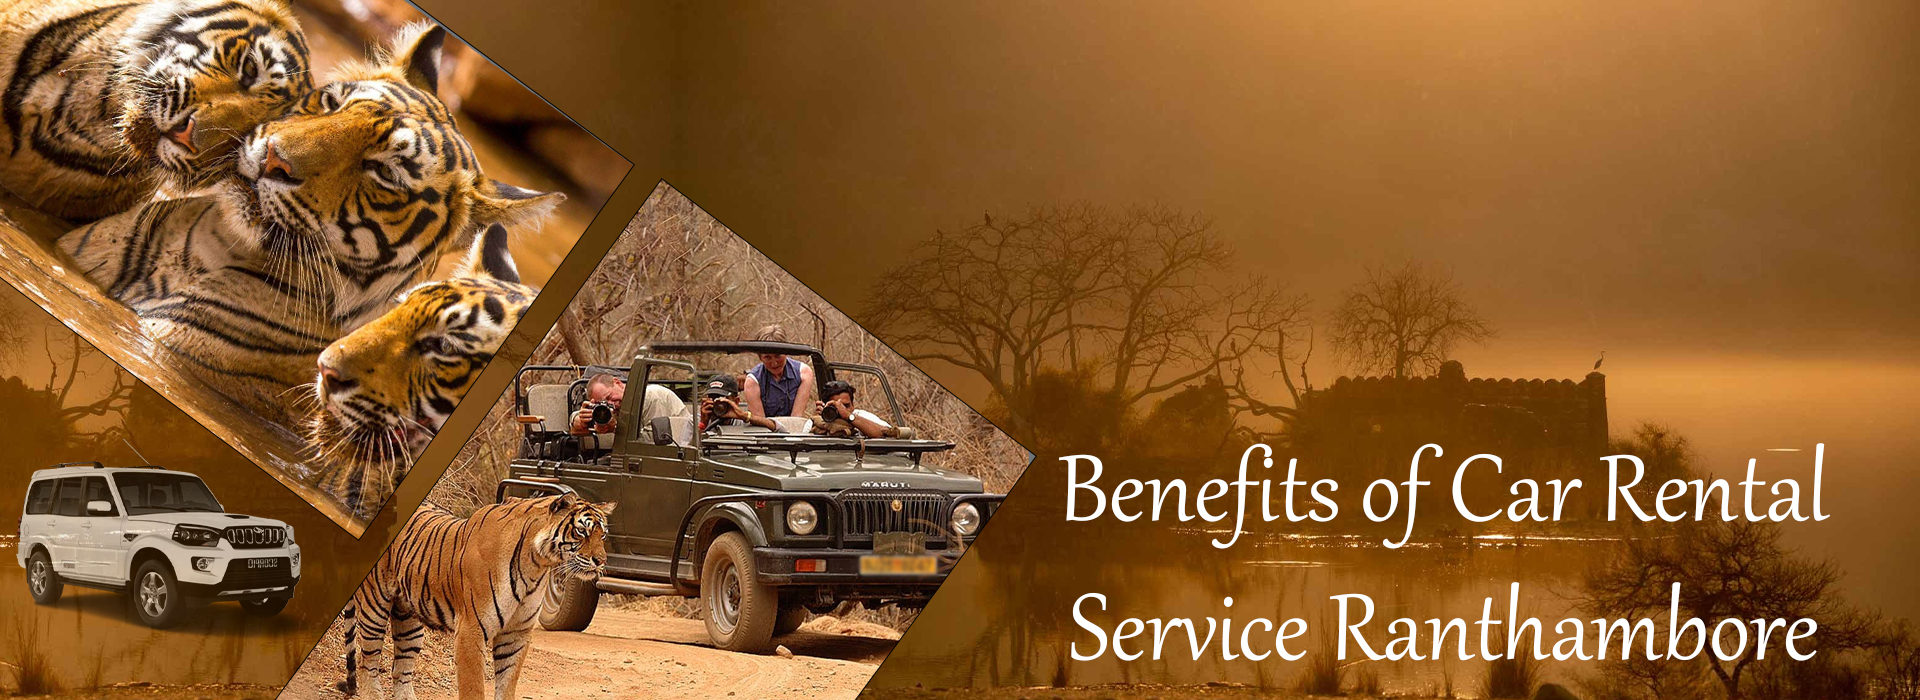 Benefits of Car Rental Service Ranthambore